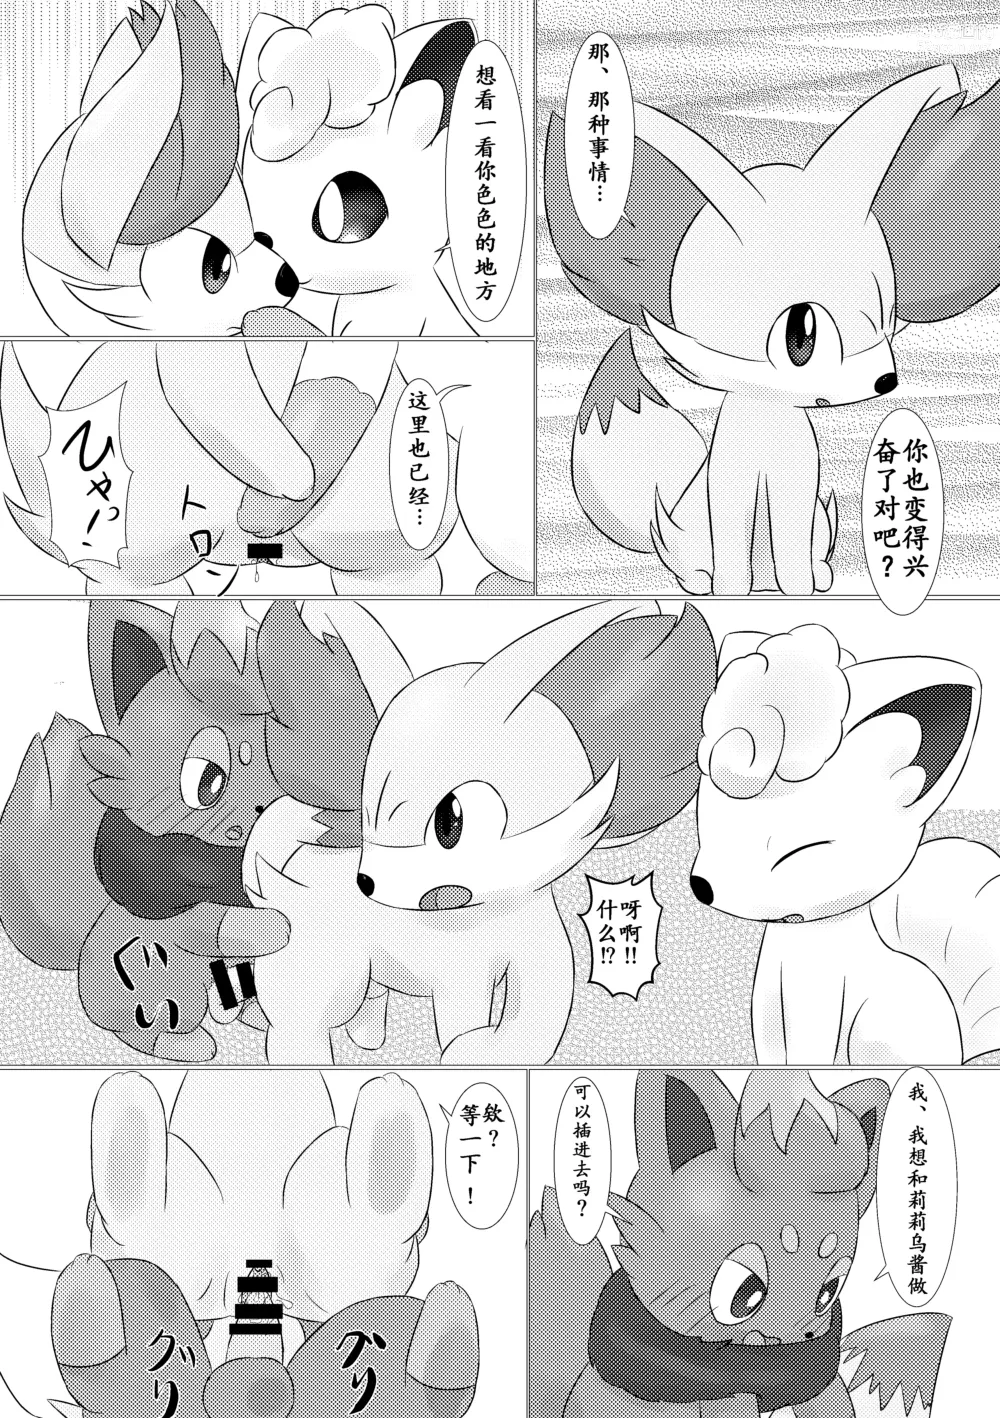 Page 19 of doujinshi 嫉妒狐的诡计